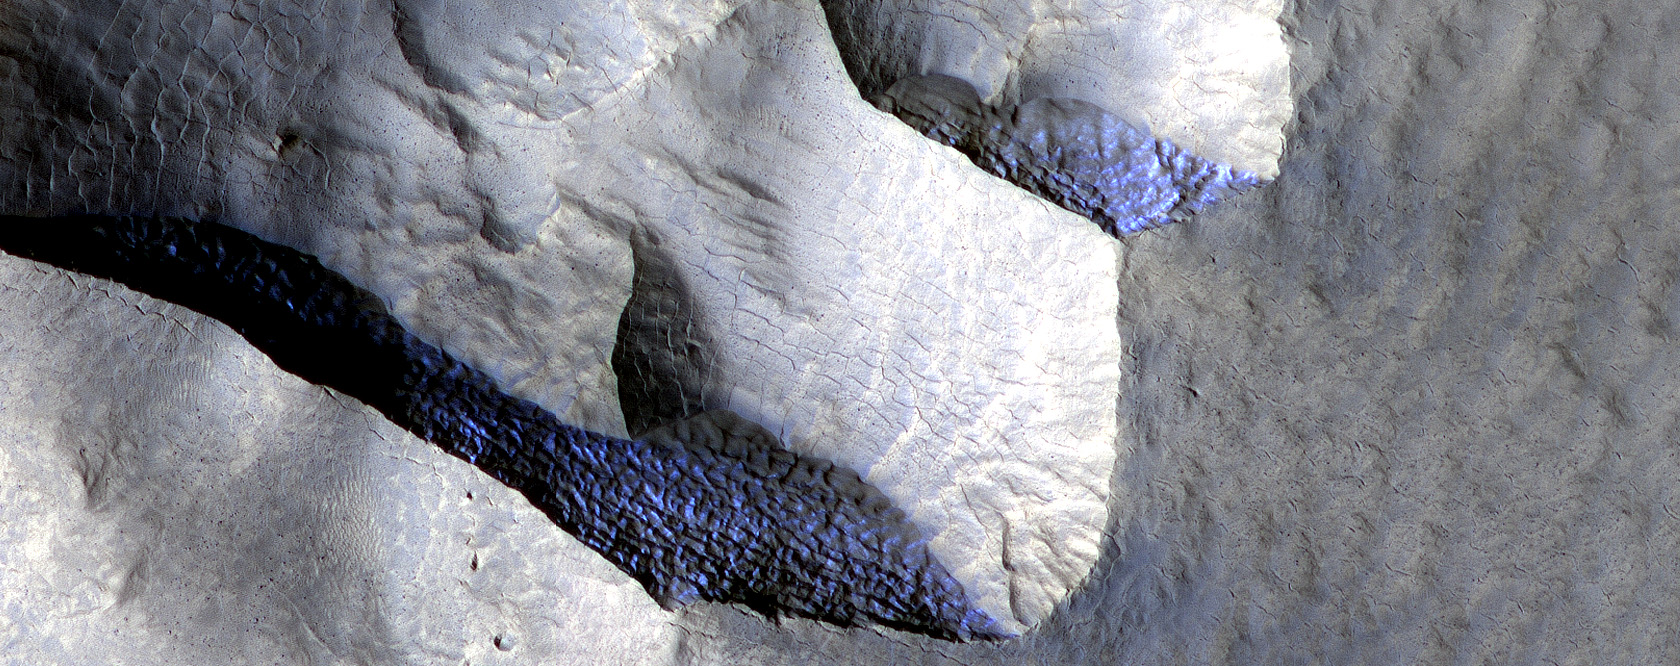 Icy Cliffs on Mars